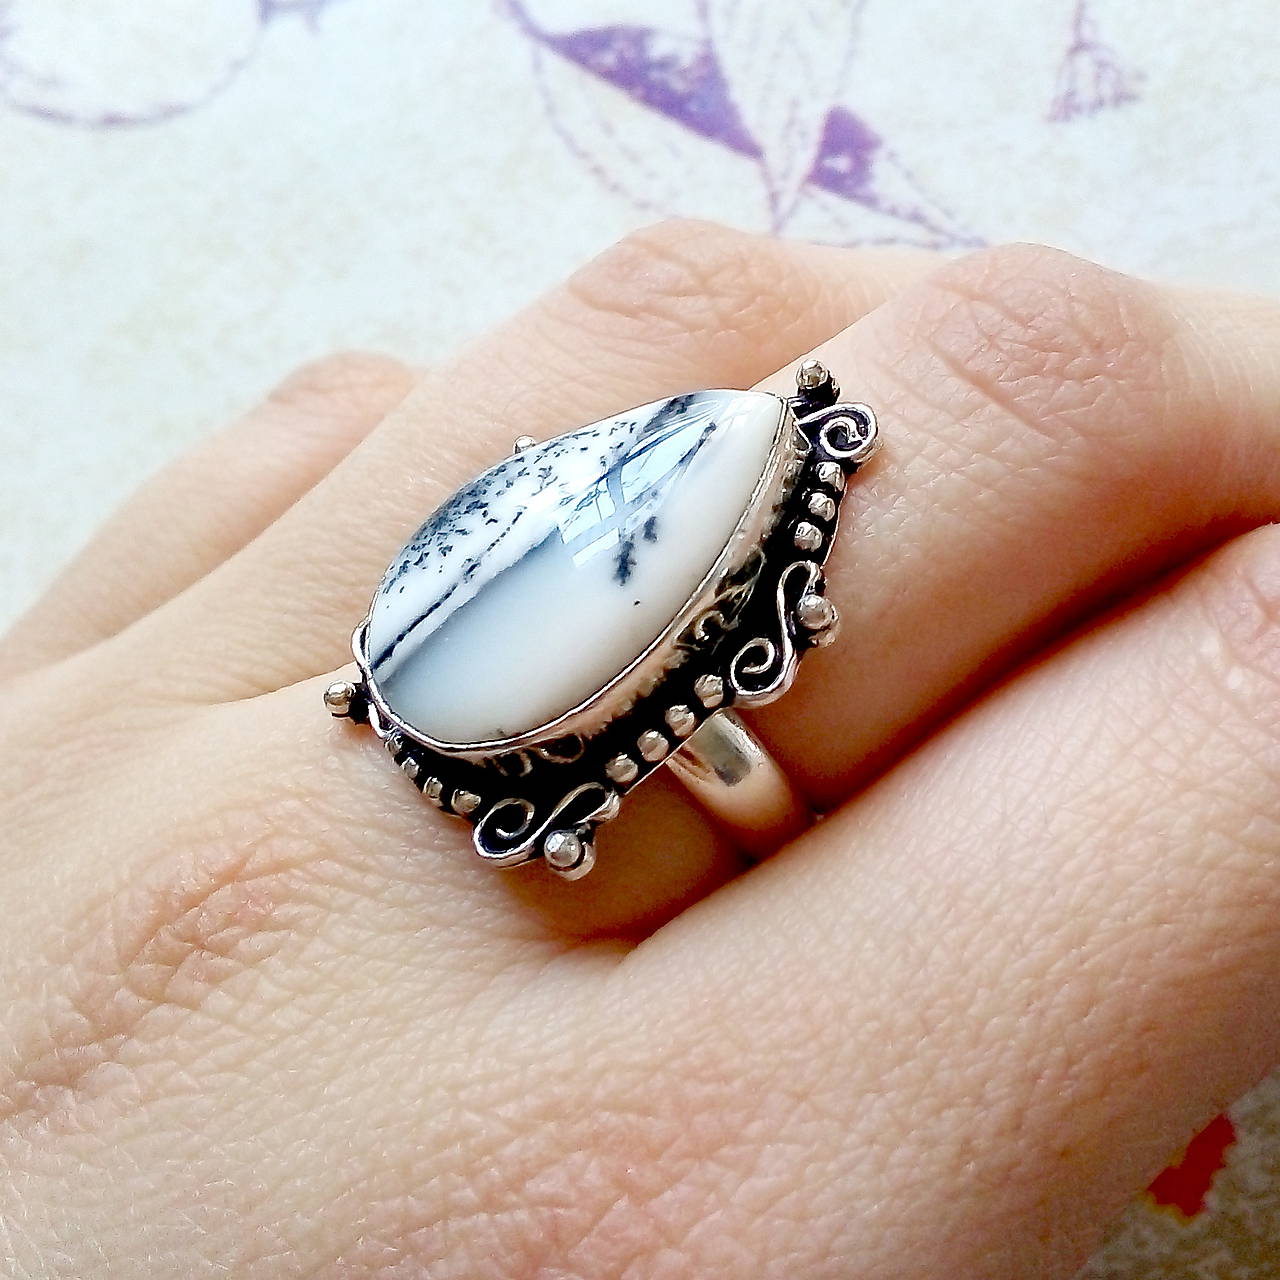 Teardrop Dendritic Opal Ring / Prsteň s dendritickým opálom v tvare slzy #1511